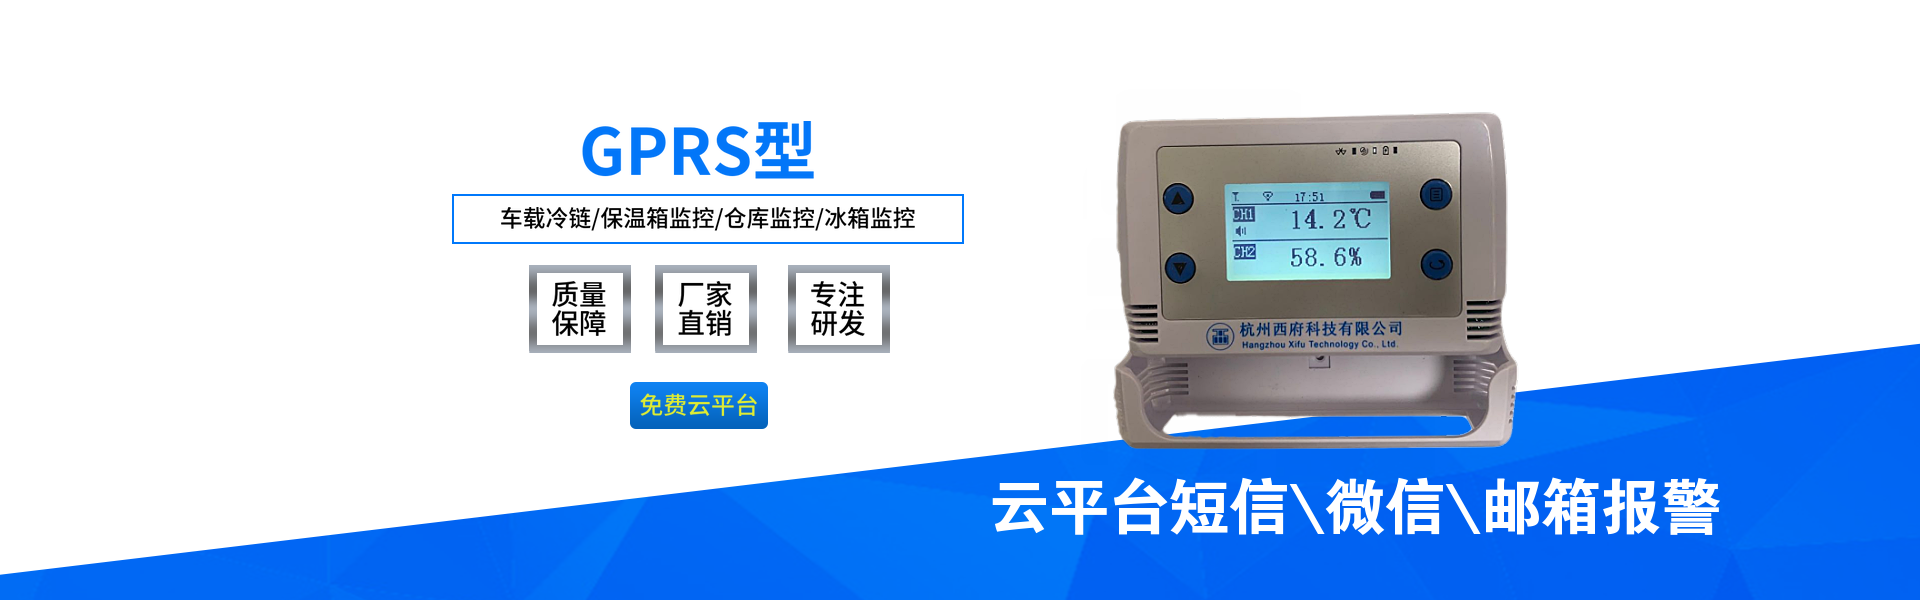 GPRS型无线温湿度度记录仪